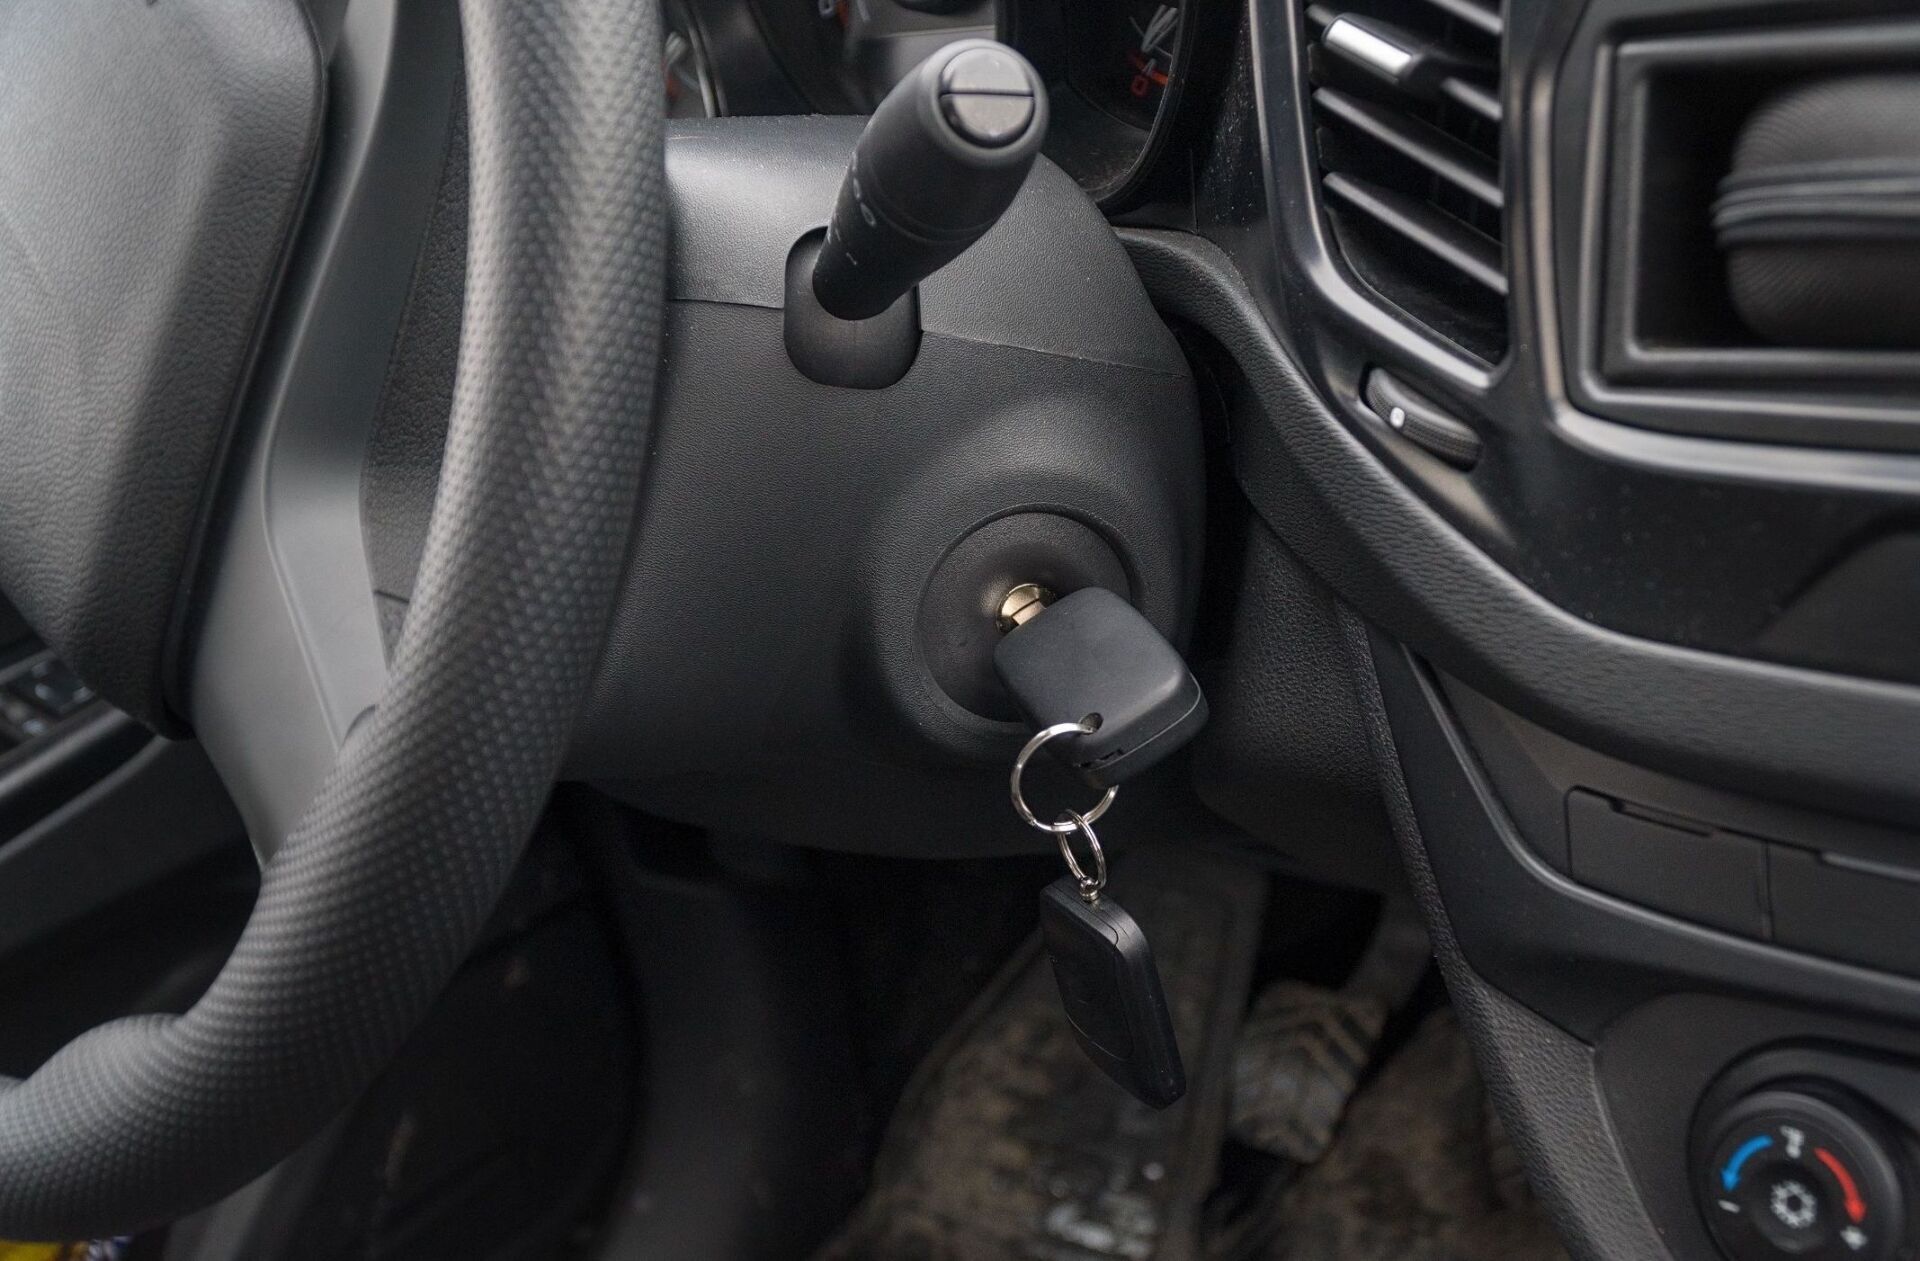 key in car ignition